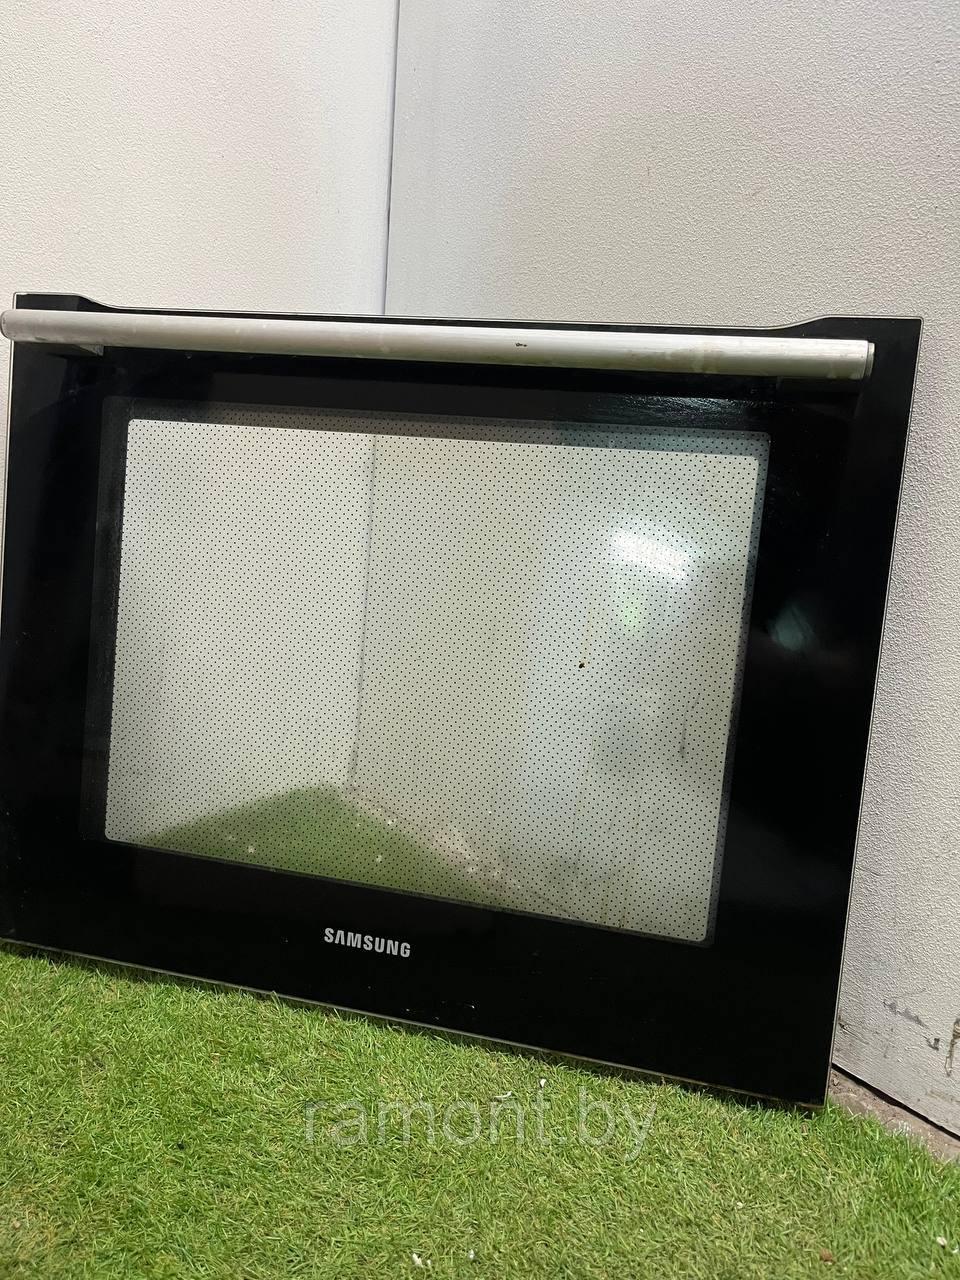 Дверца духового шкафа Samsung (Самсунг)